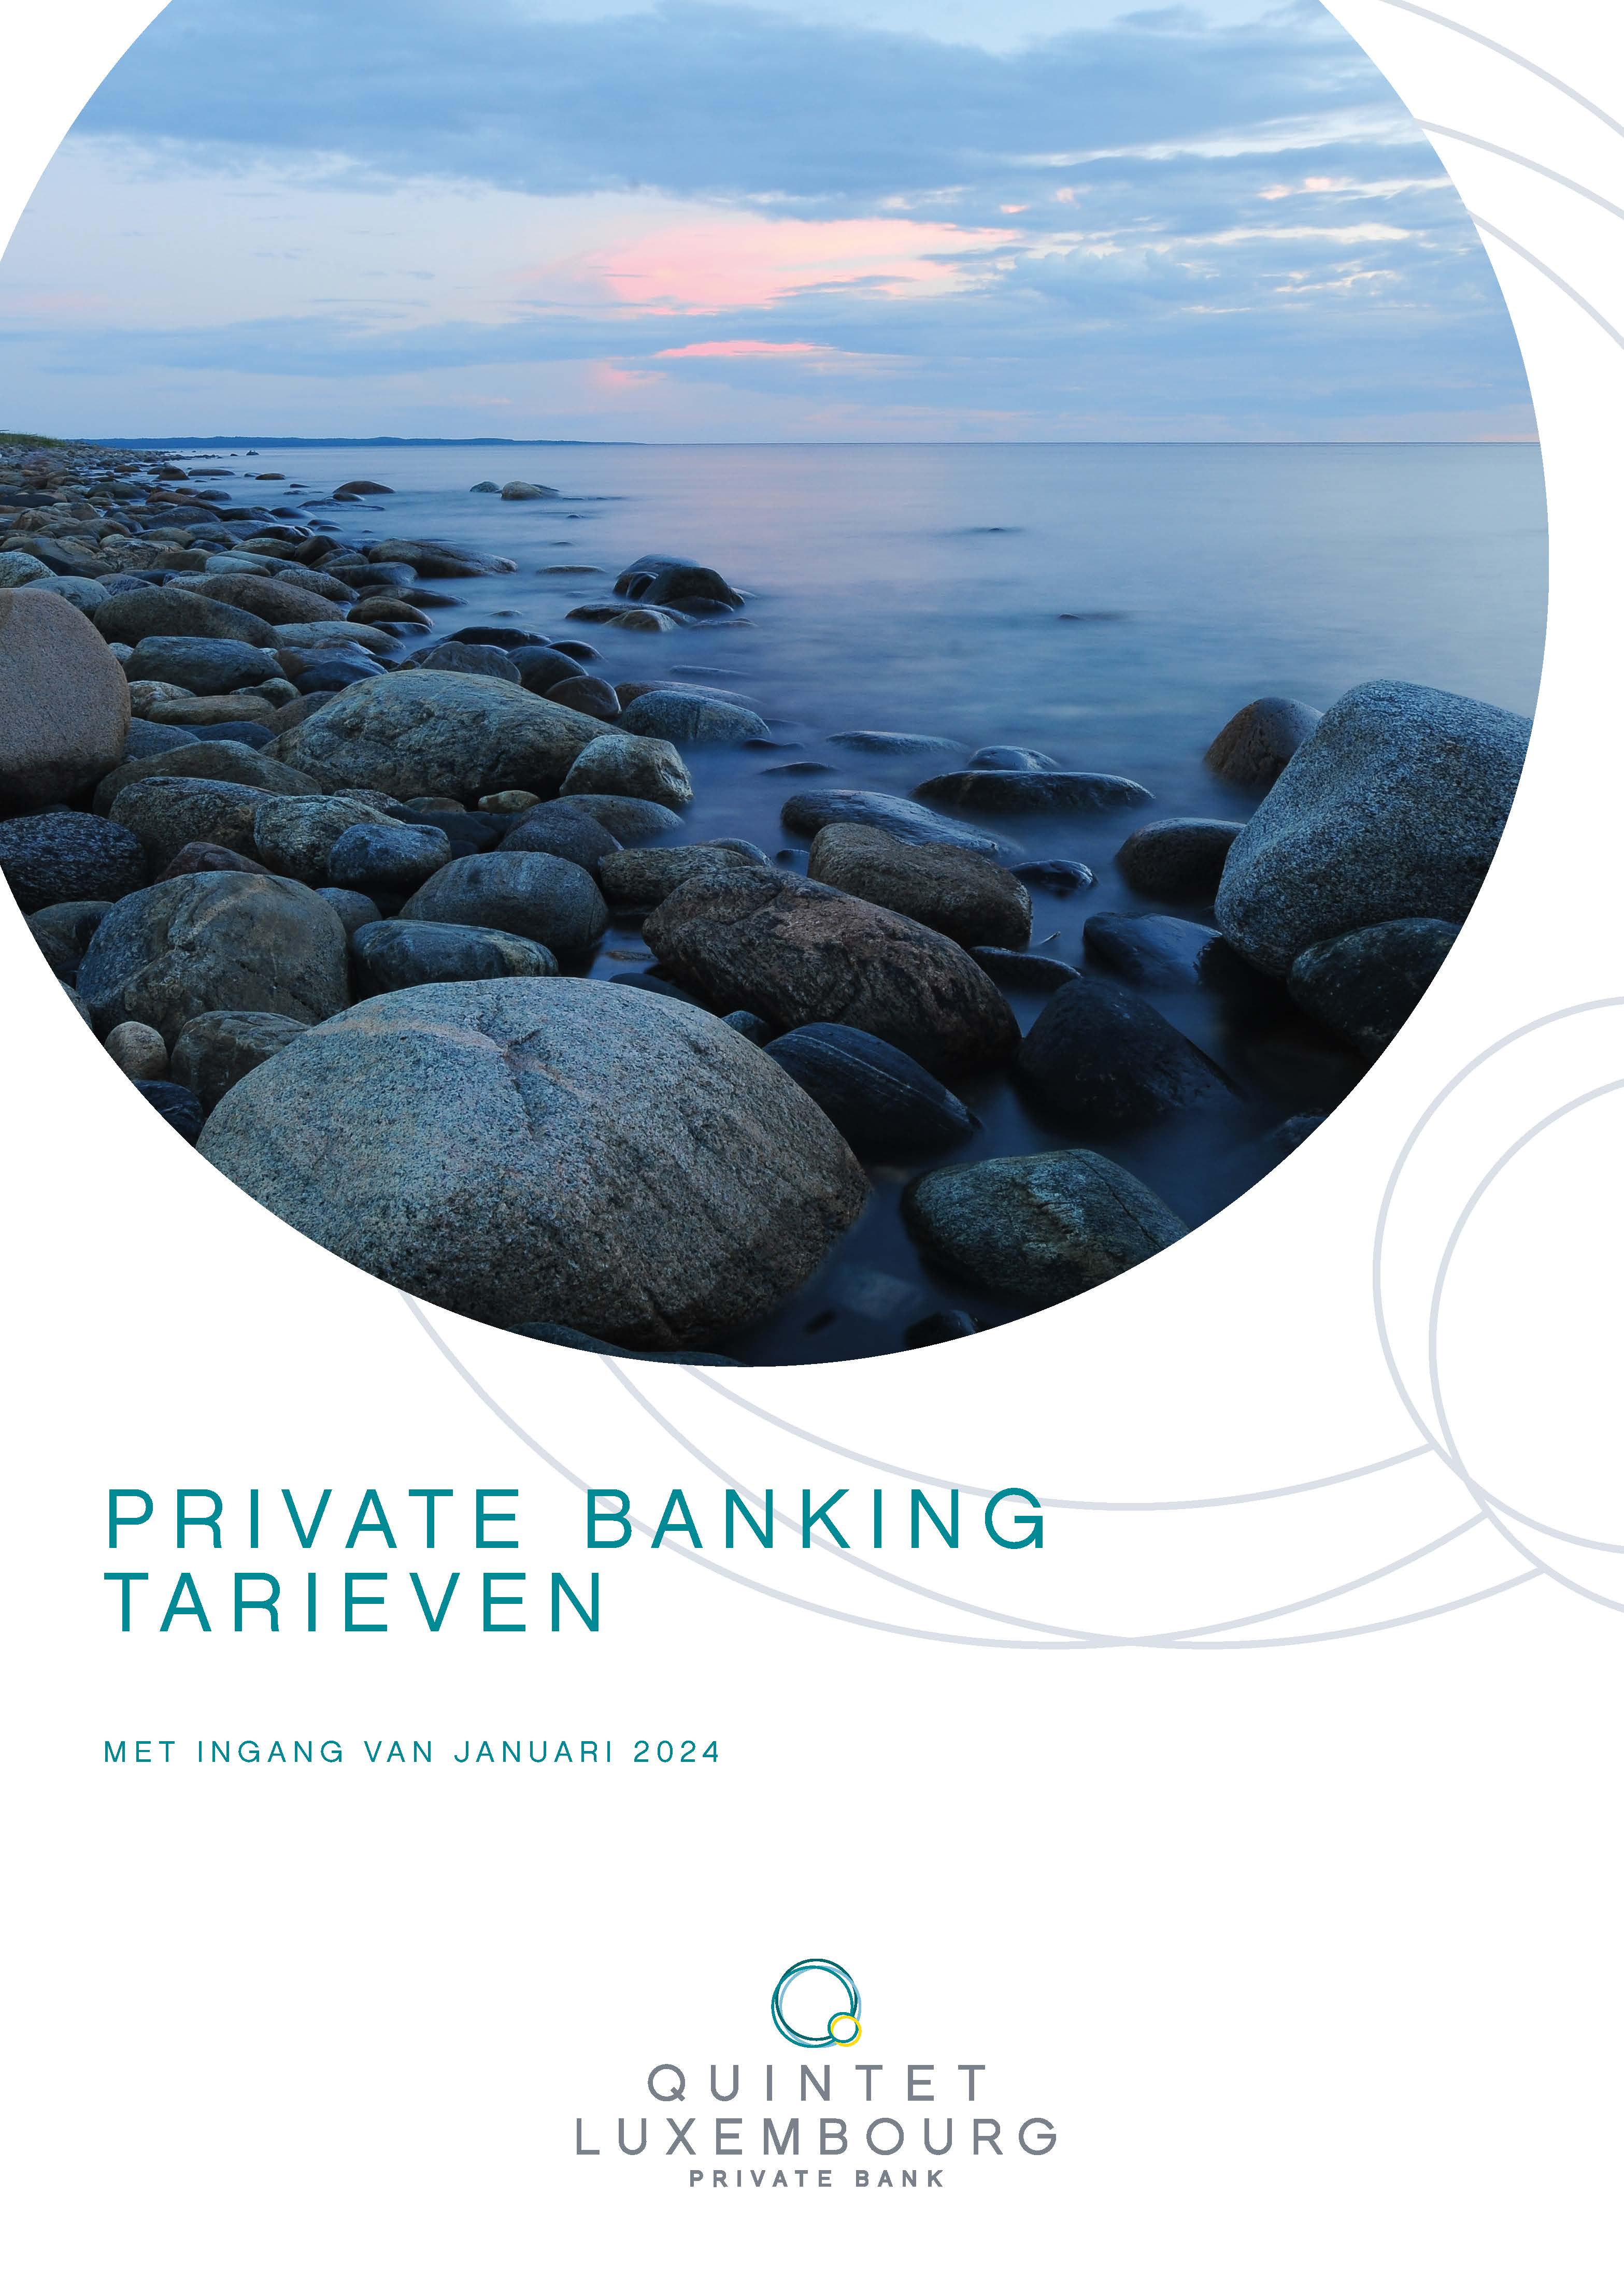 Private banking tarieven